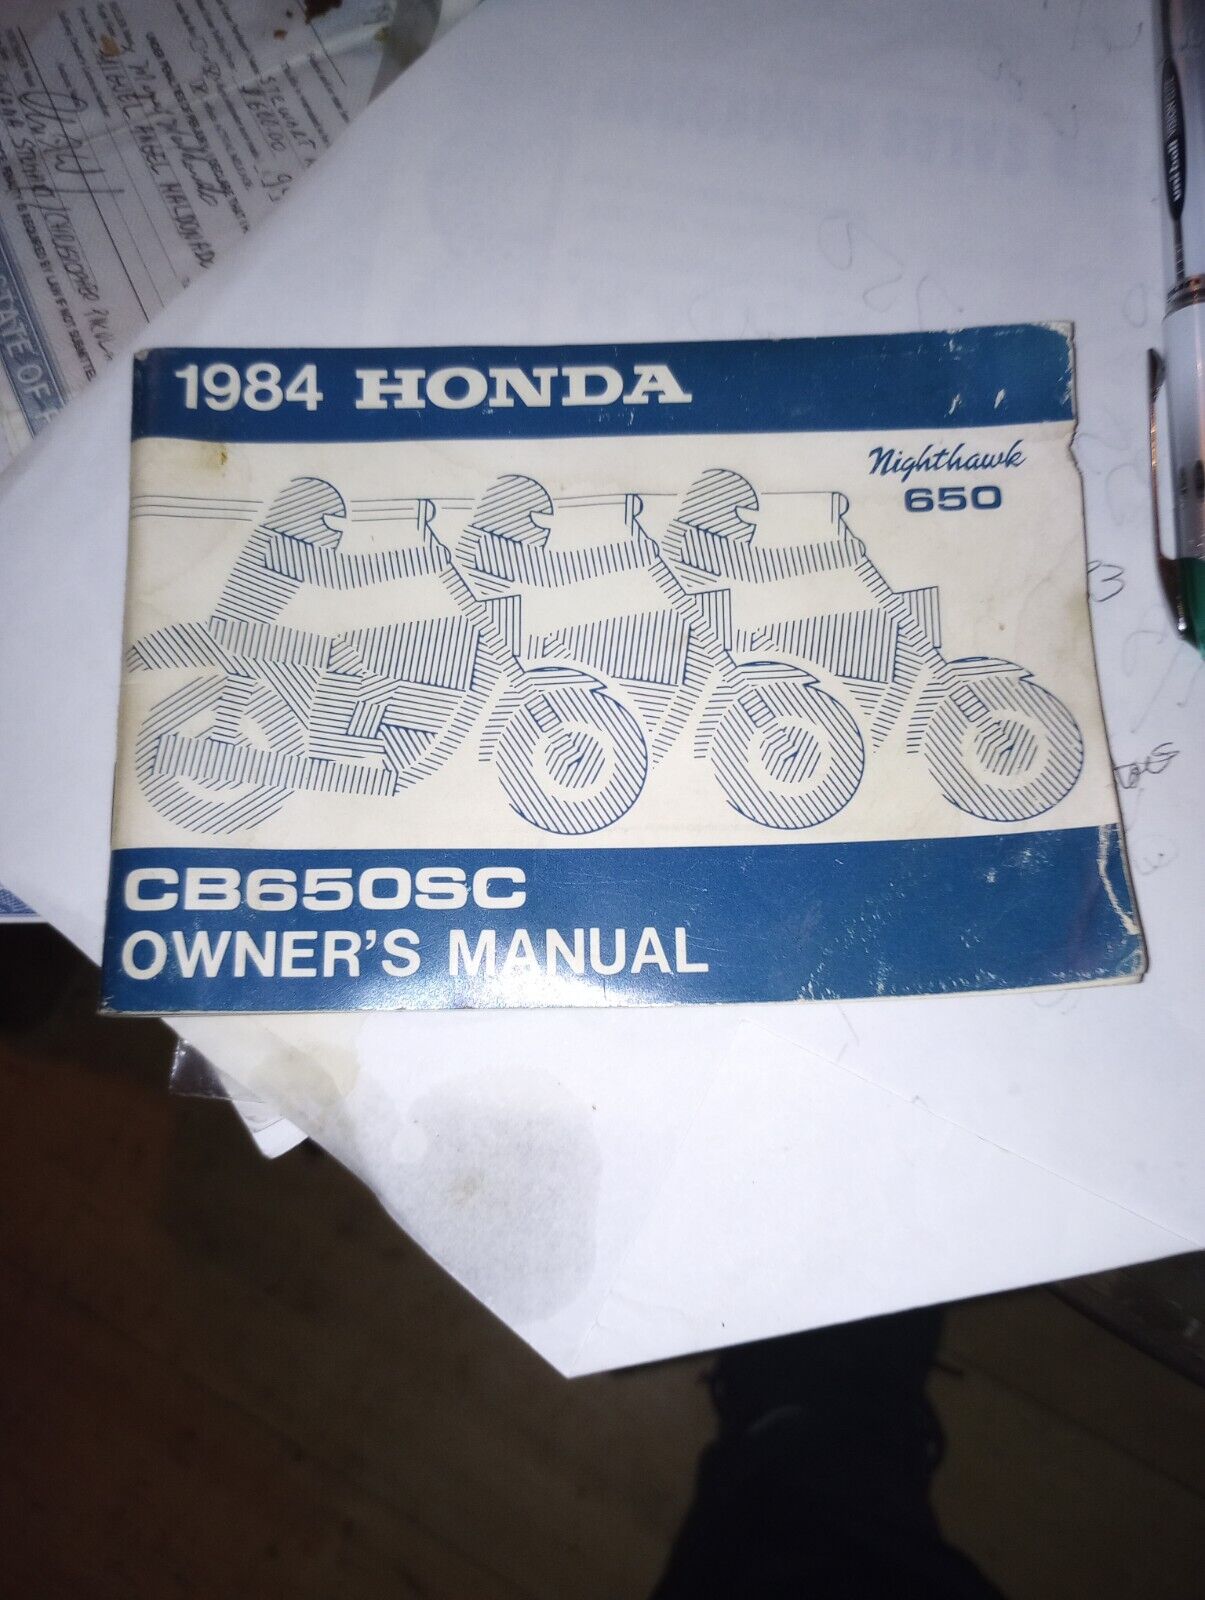 1984 Honda Nighthawk 650 CB650SC CB650 CB 650 C ran well when parked 26 years ago